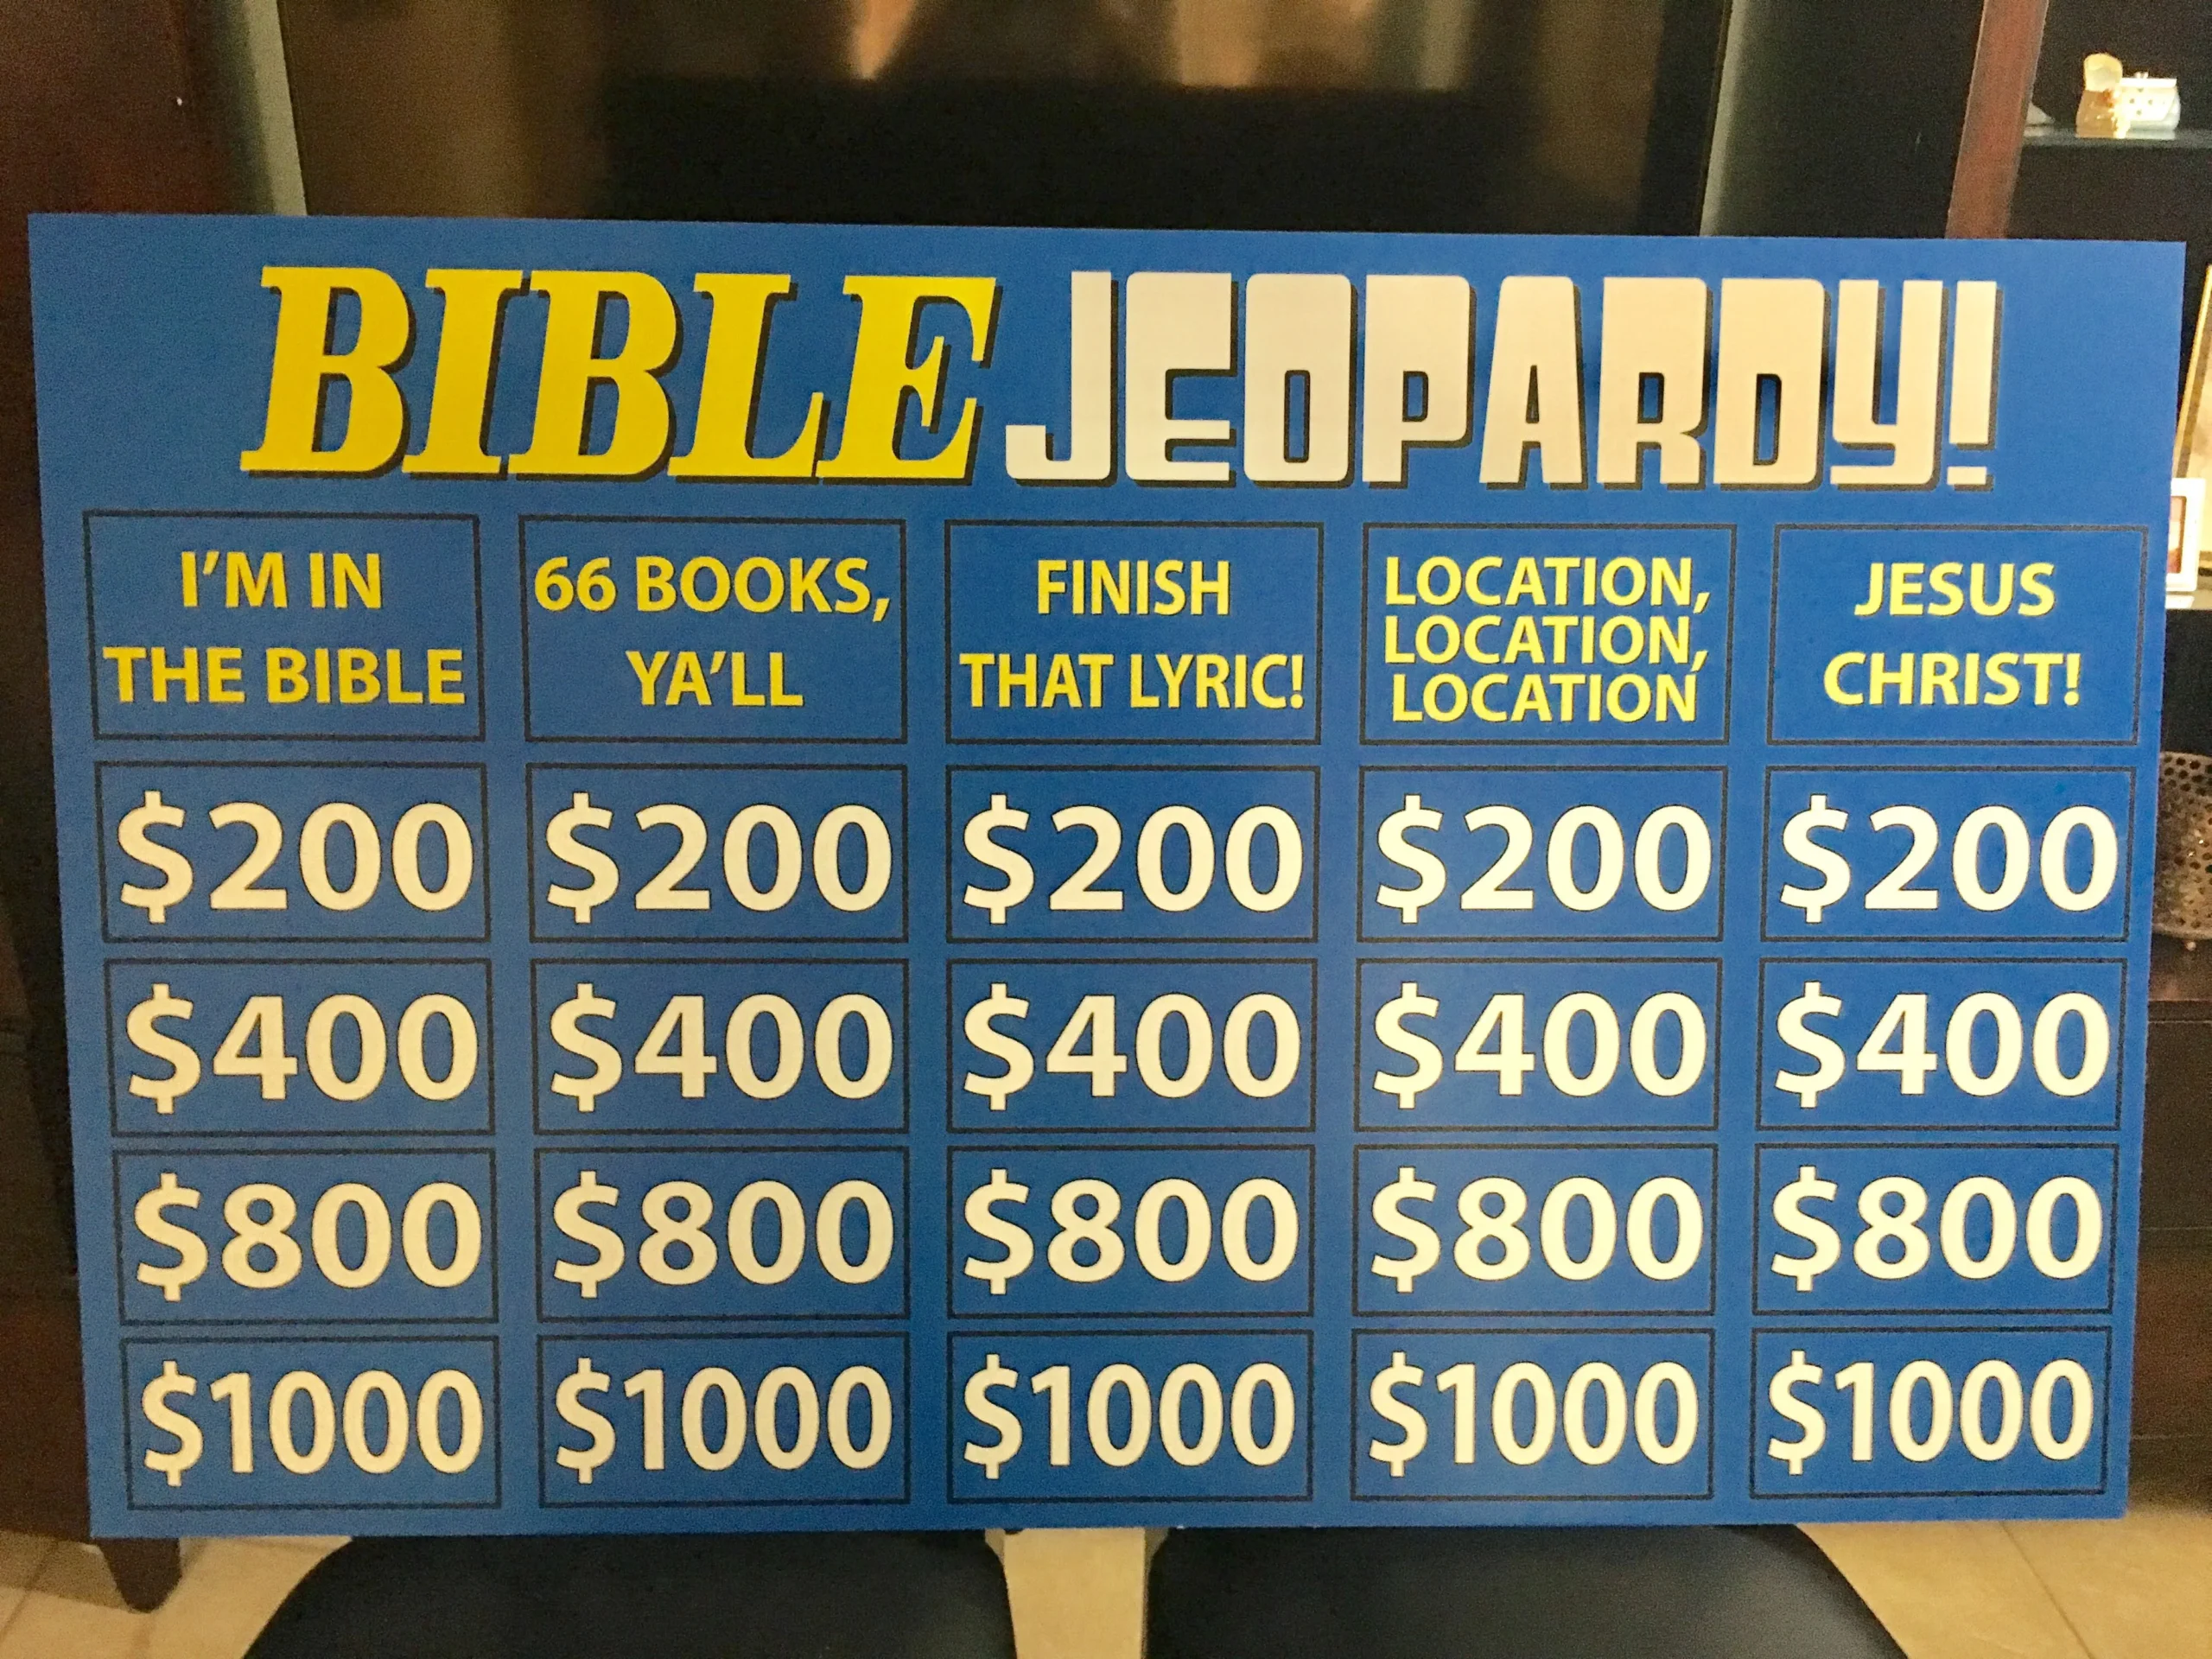 bible jeopardy